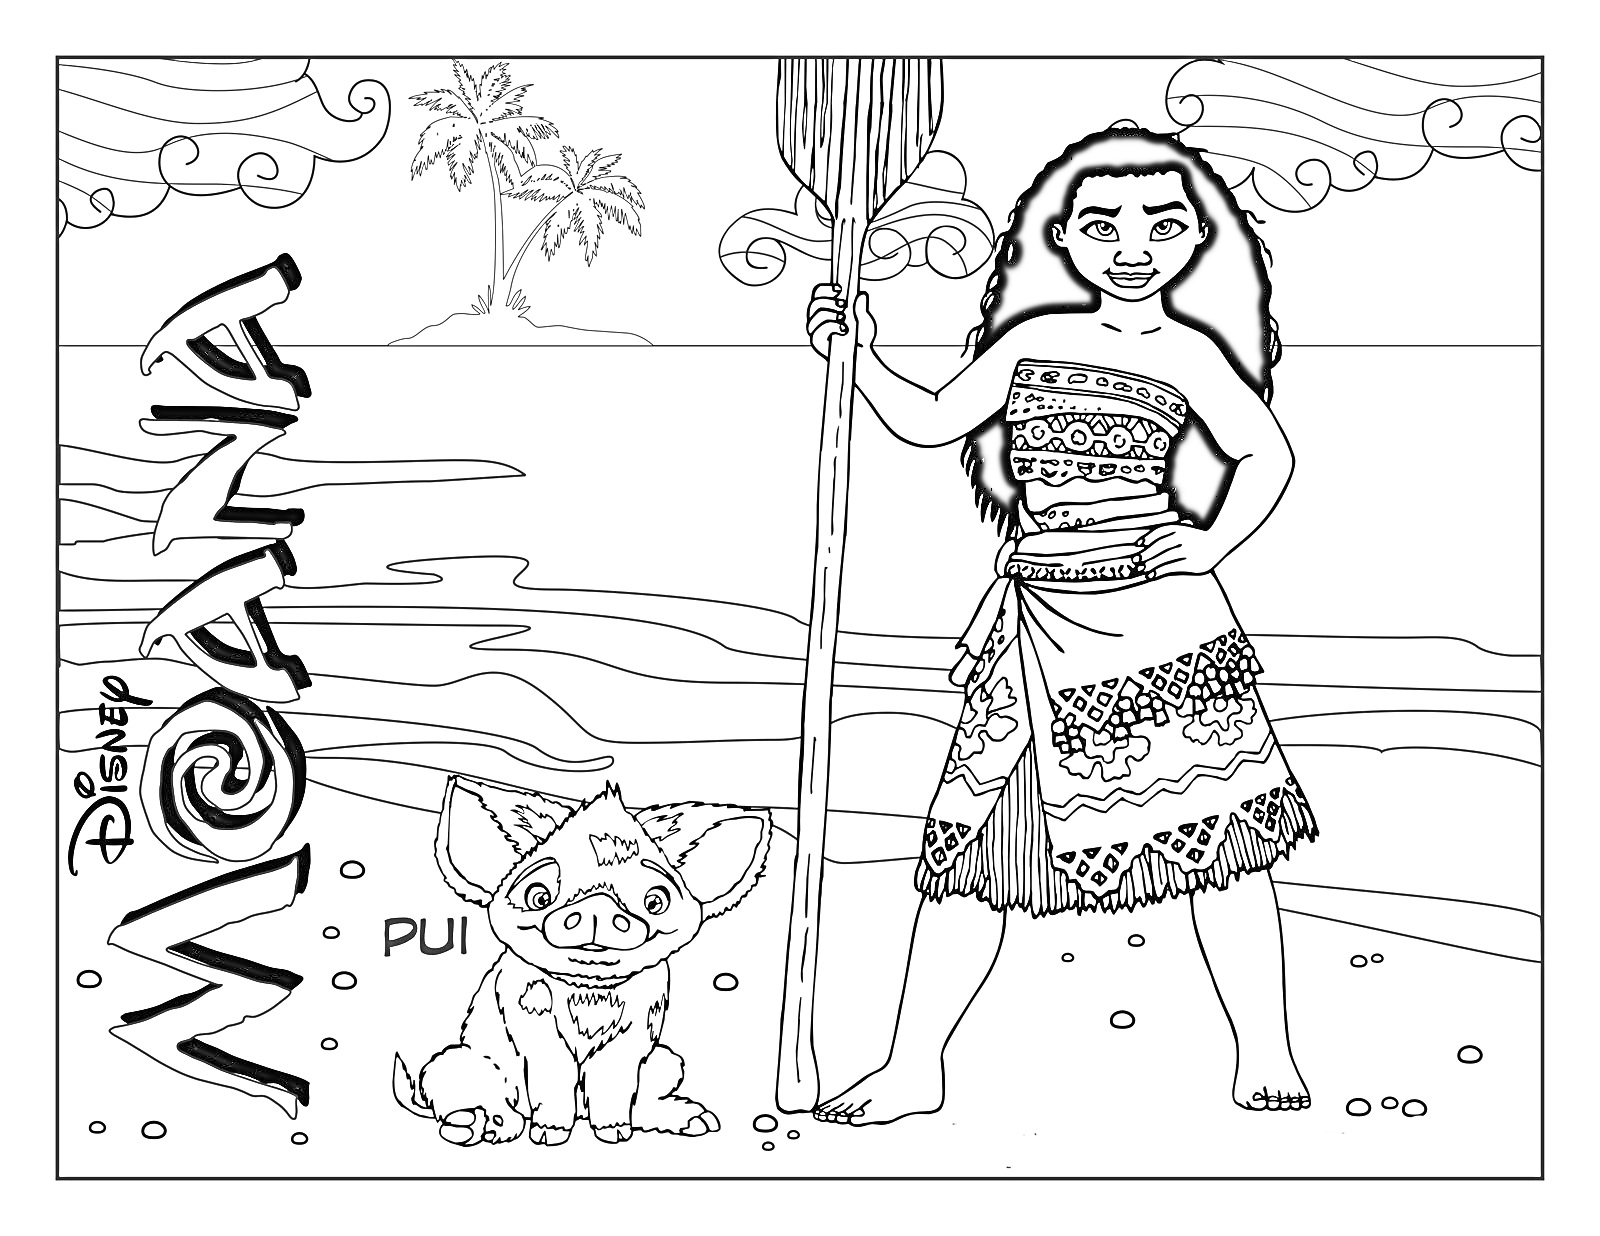 Моана с веслом и Пуа на пляже